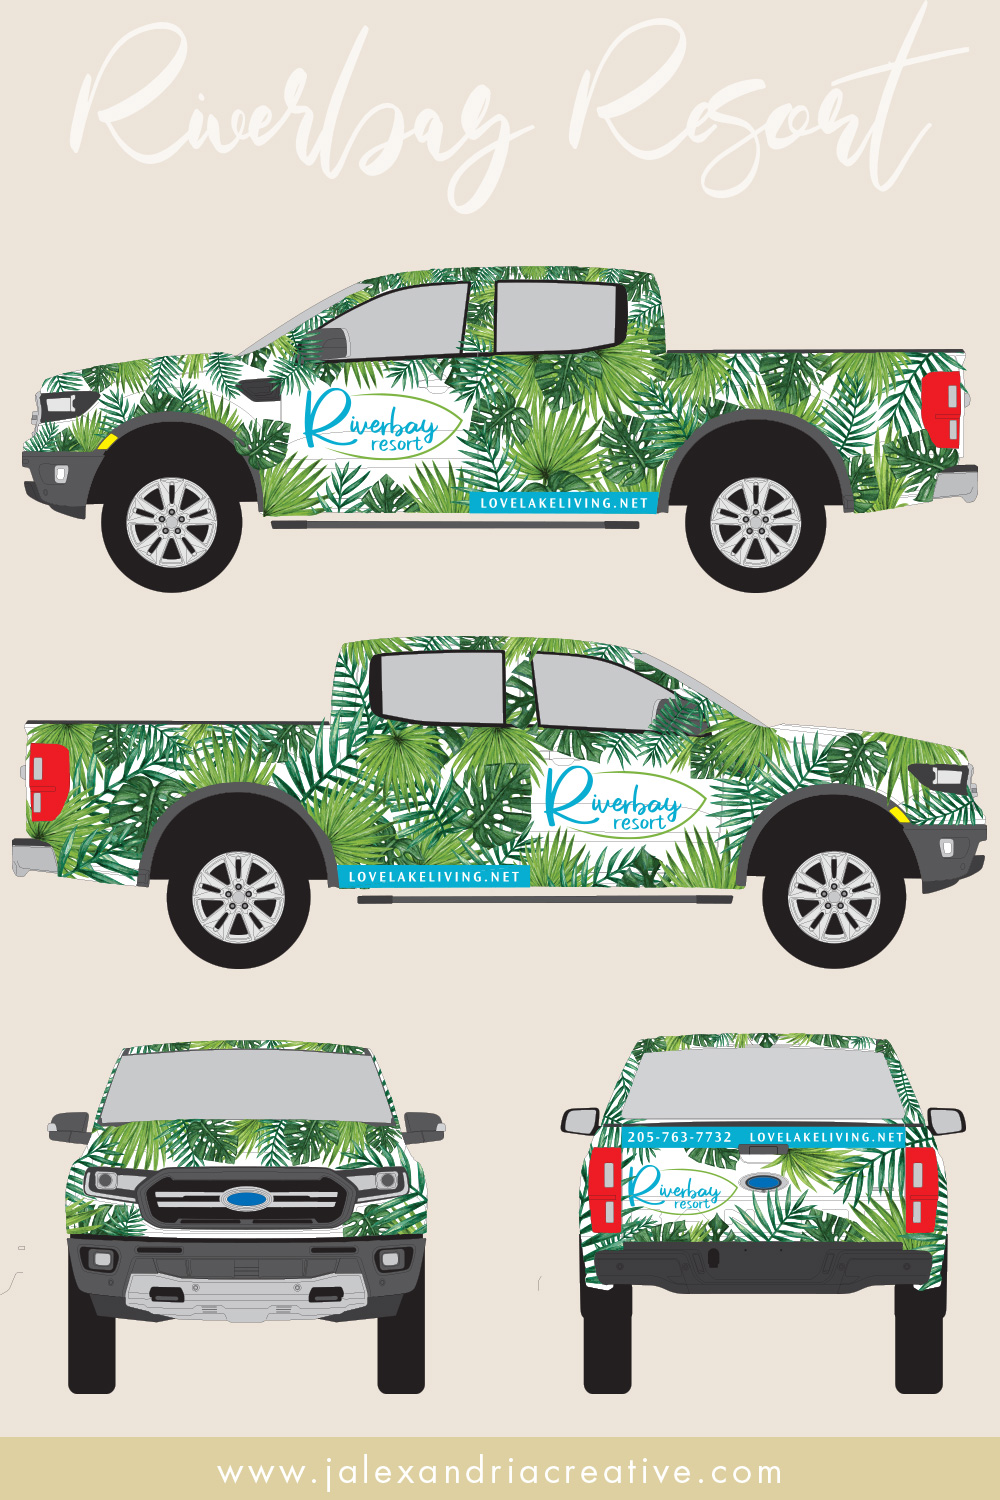 Riverbay Resort Truck Wrap  by J. Alexandria Creative | truck wrap design